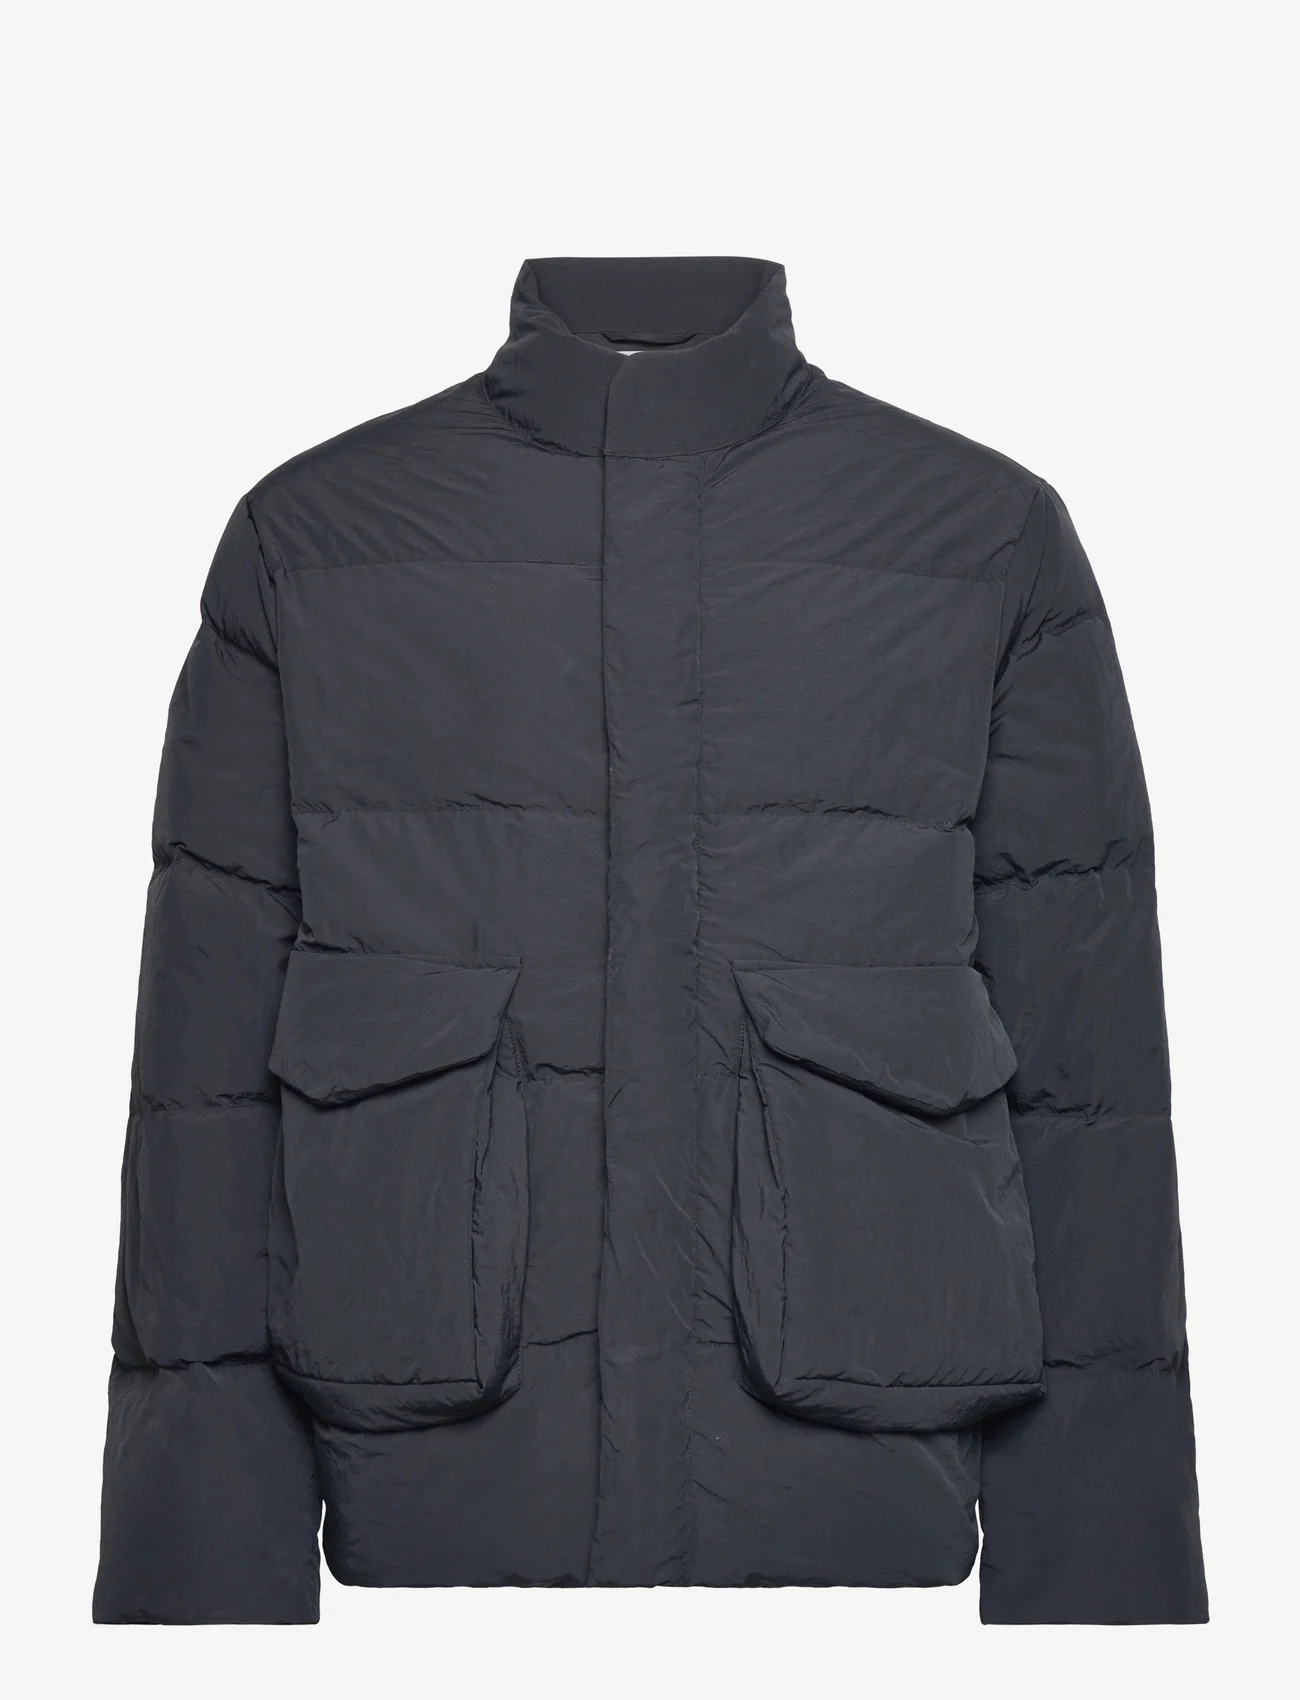 Garment Project - Down Jacket - winter jackets - 999 black - 0